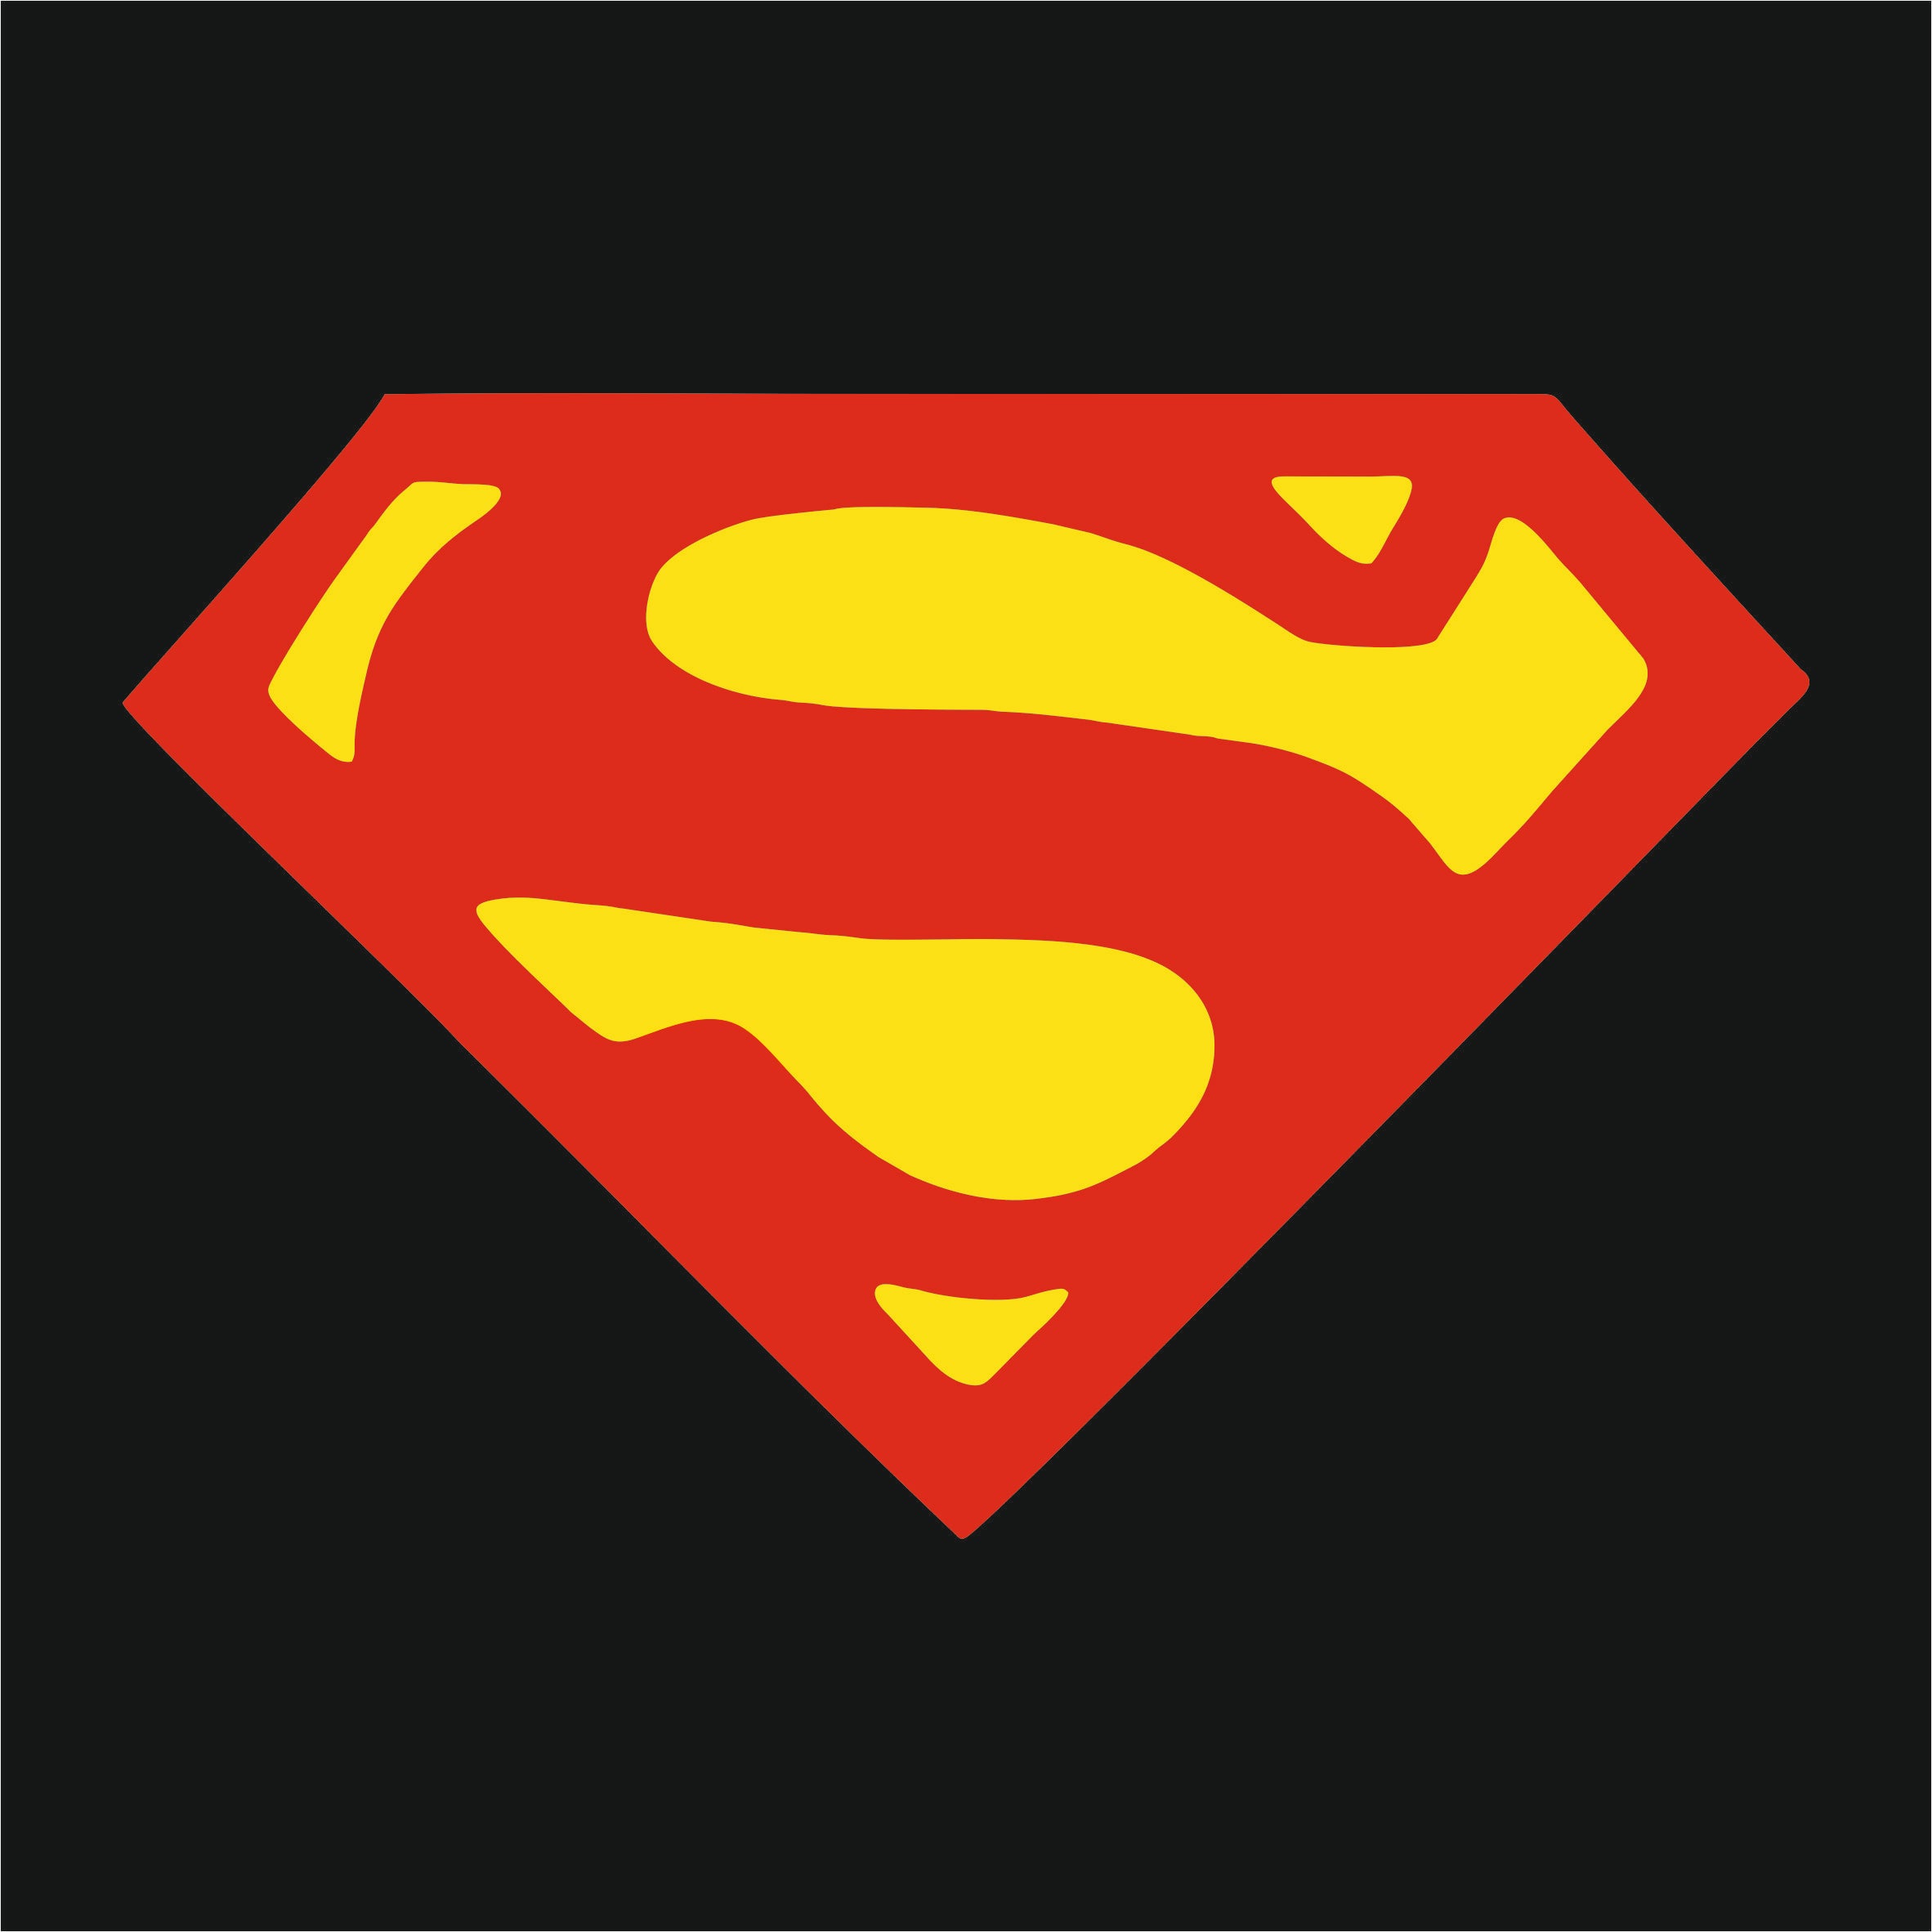 Superman Reactr Tshirts For Men - Eyewearlabs